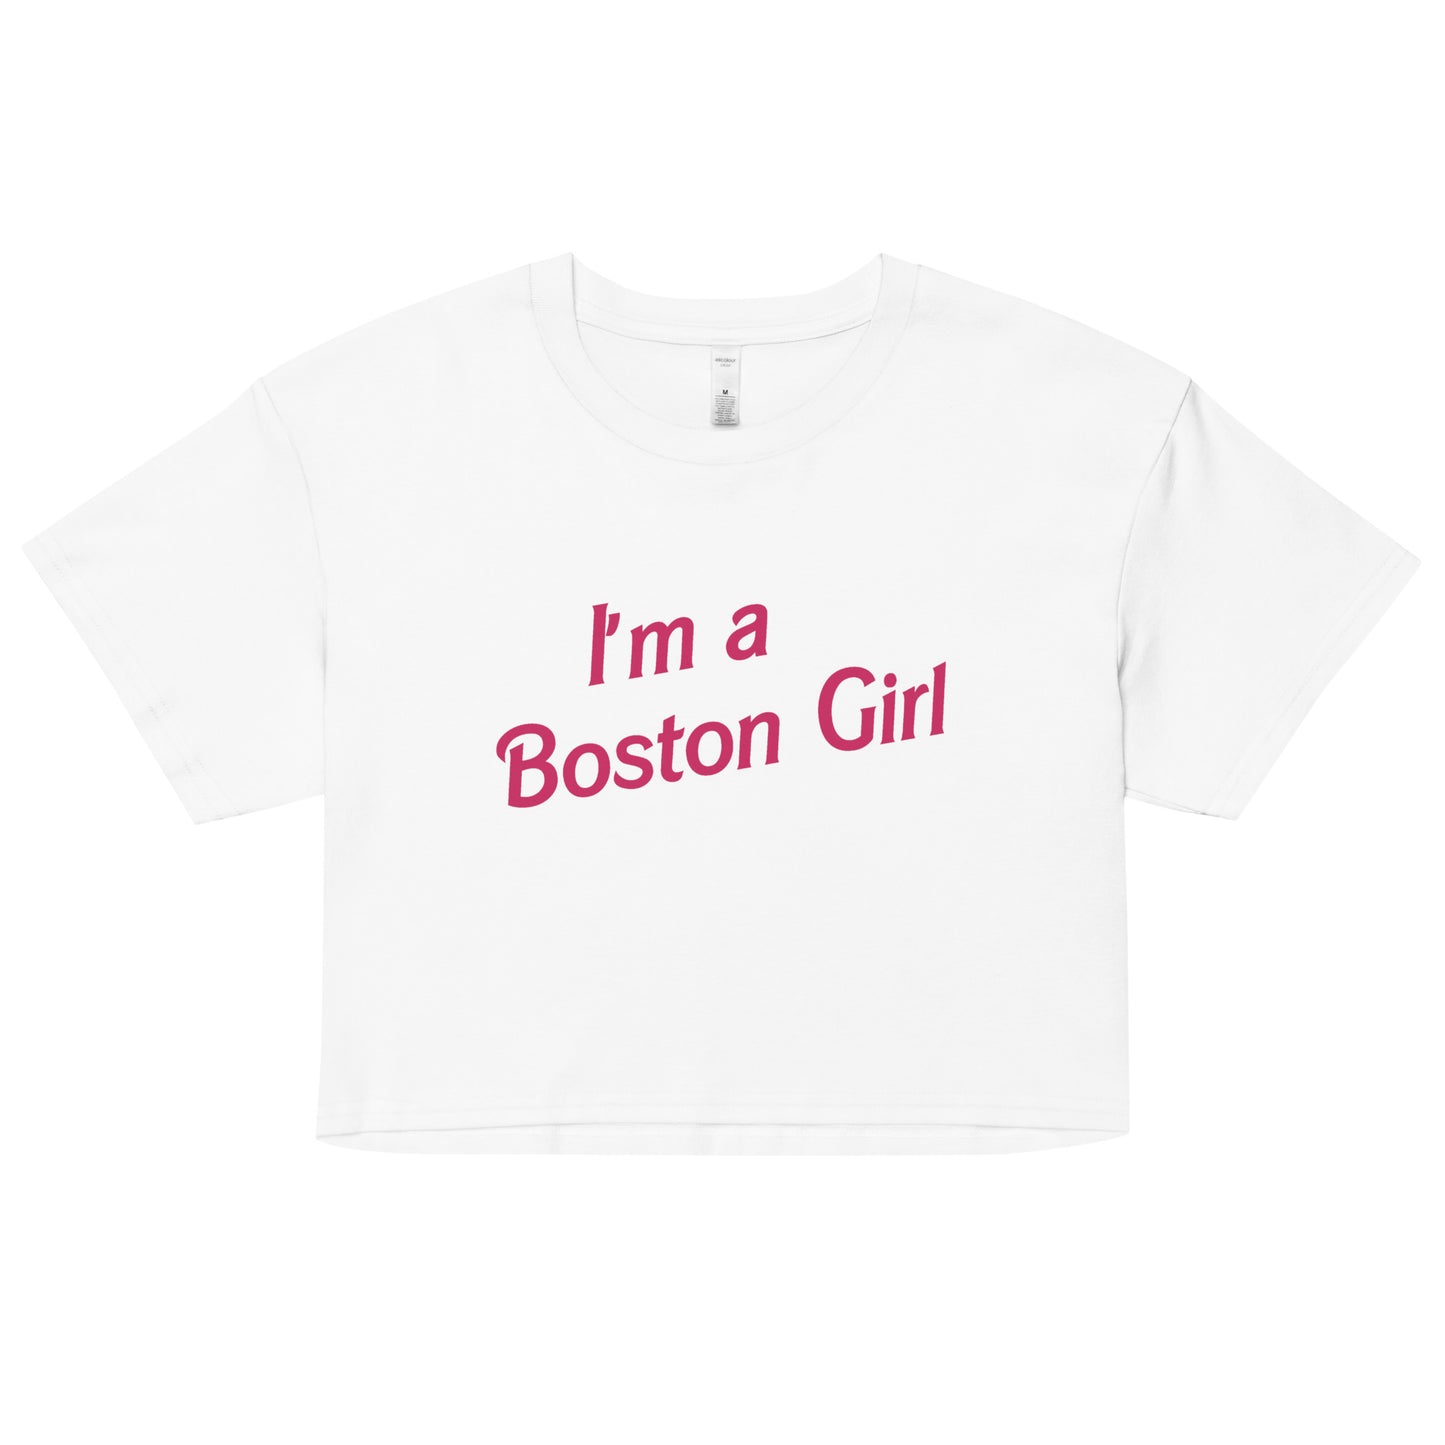 I'm a Boston Girl Women's Crop Top